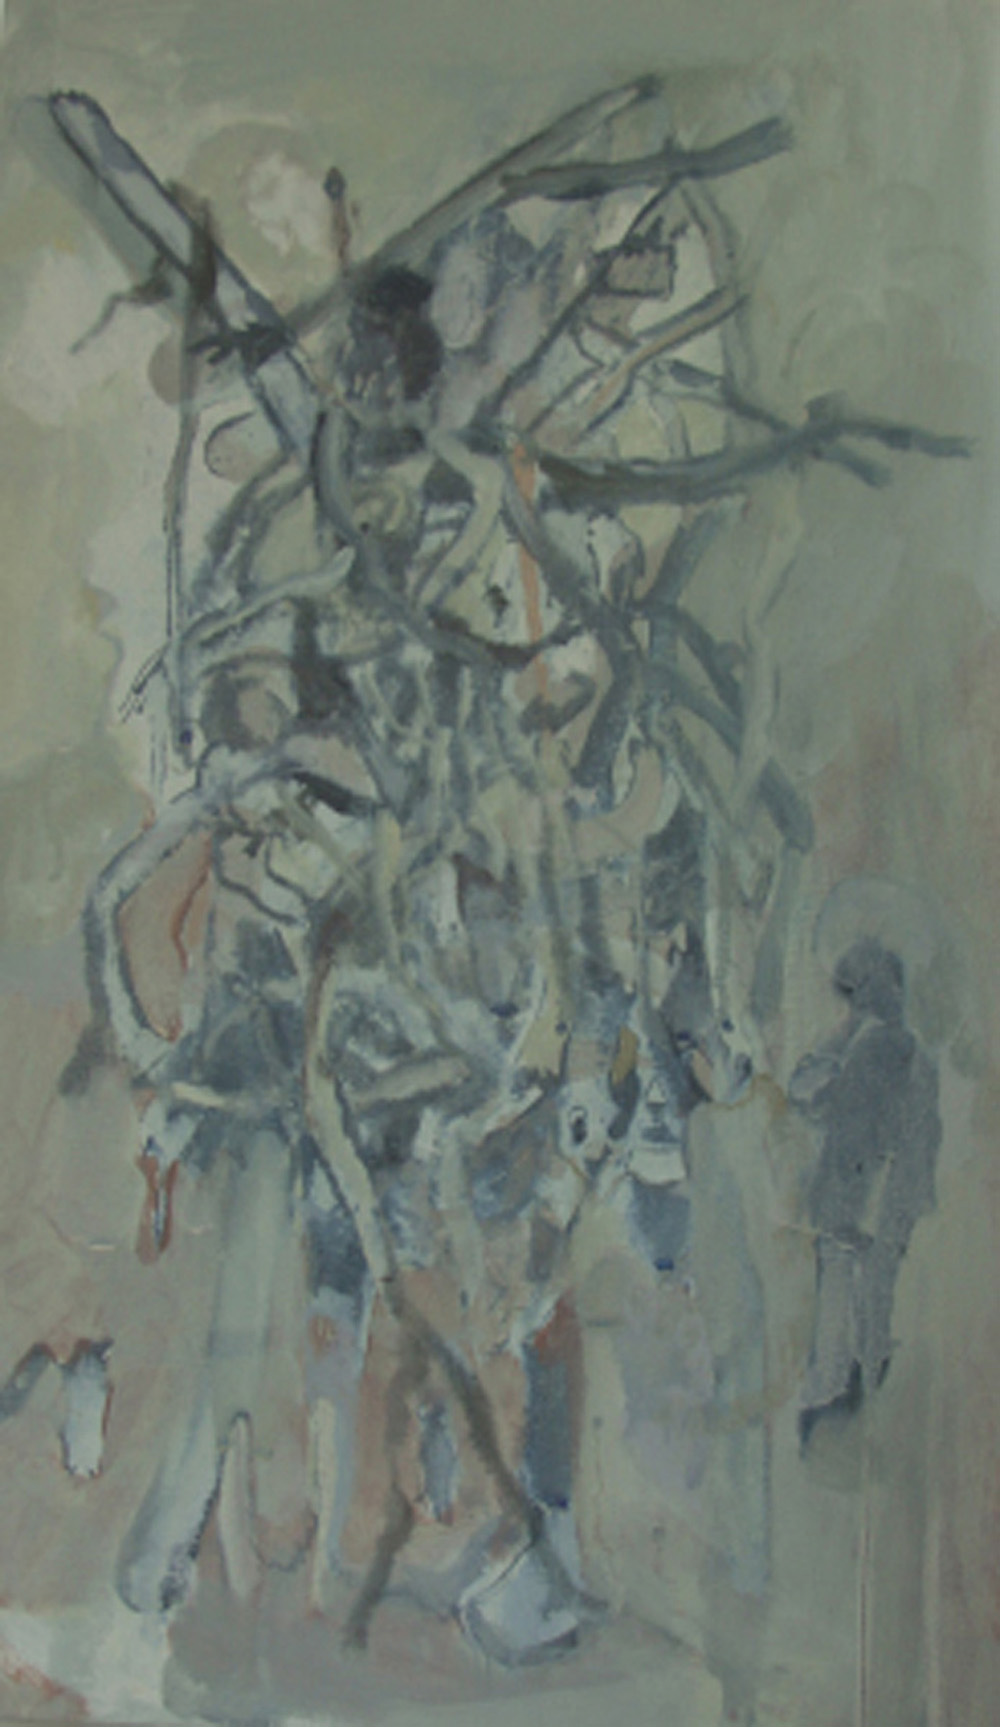 Shrub, 2008. Acrylic on canvas. 50 x 30 cms, 19 5/8 x 11 3/4 ins. Thomas Hylander